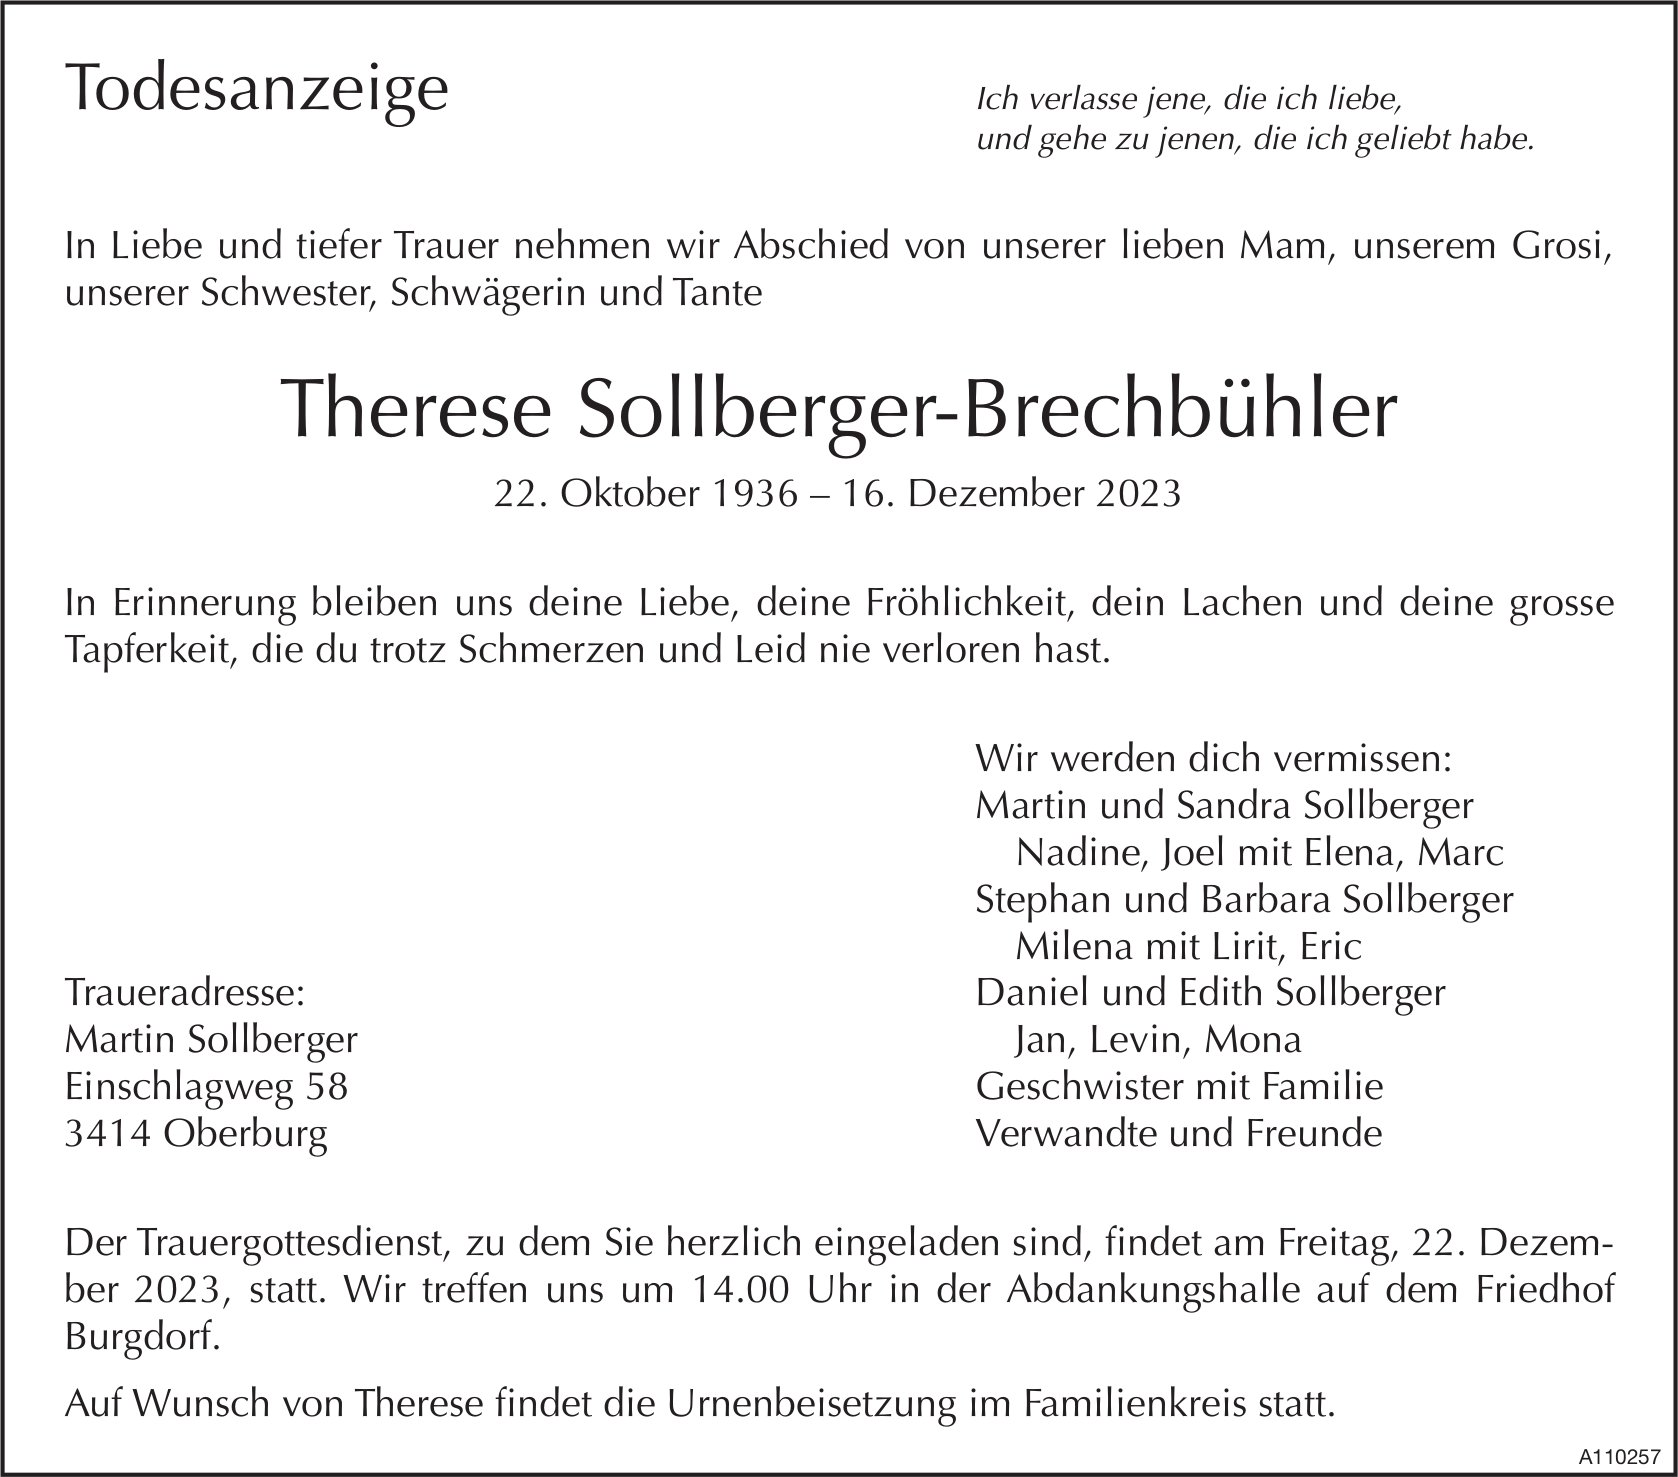 Therese Sollberger-Brechbühler, Dezember 2023 / TA